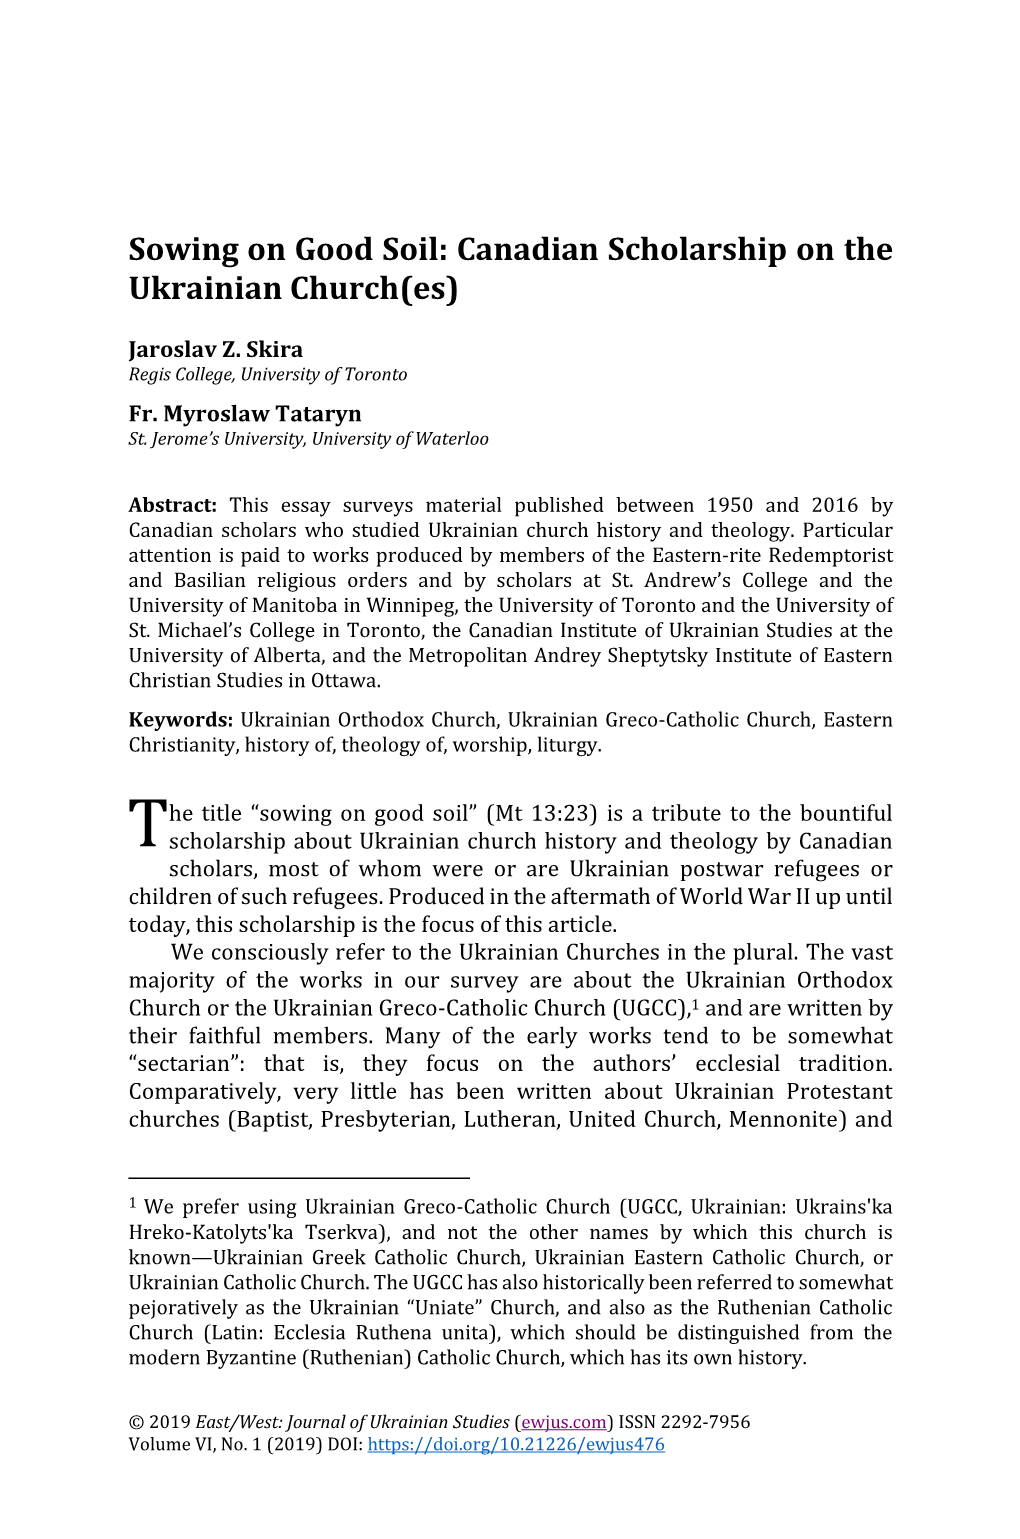 Canadian Scholarship on the Ukrainian Church(Es), EWJUS, Vol